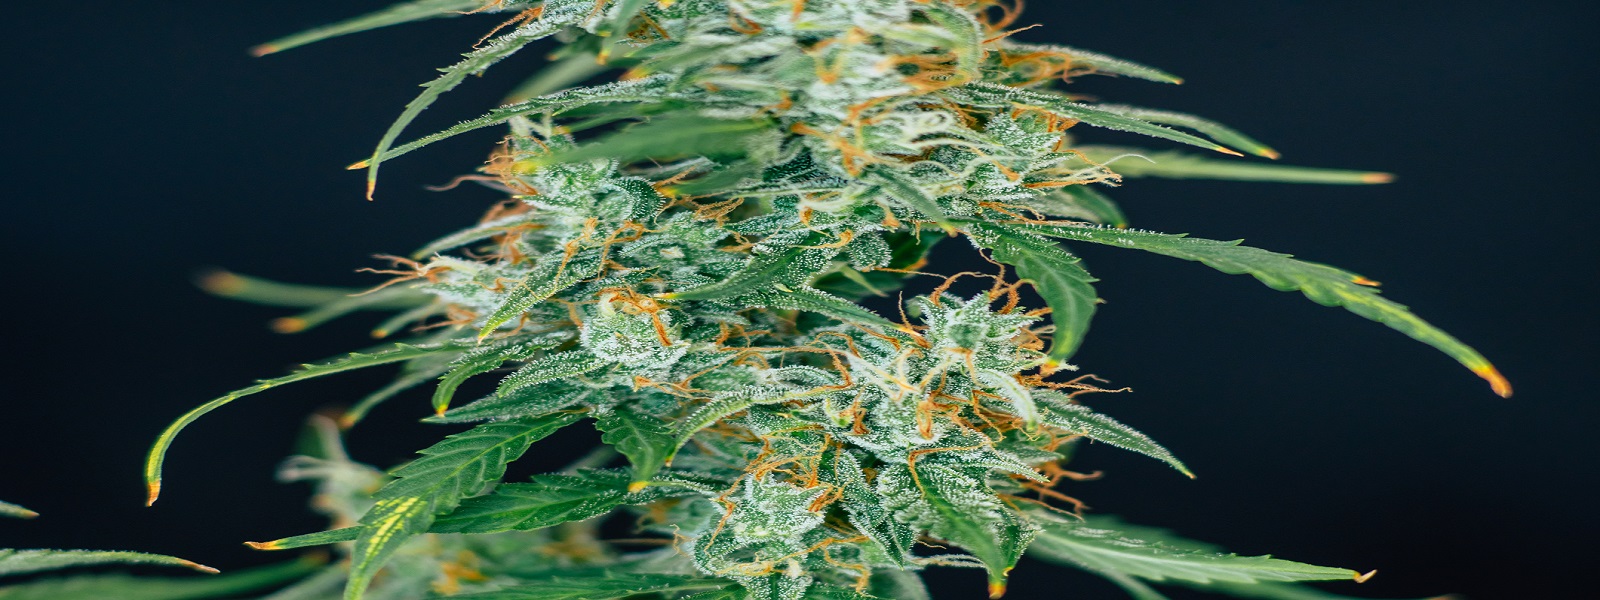 powdery mildew on cannabis plant